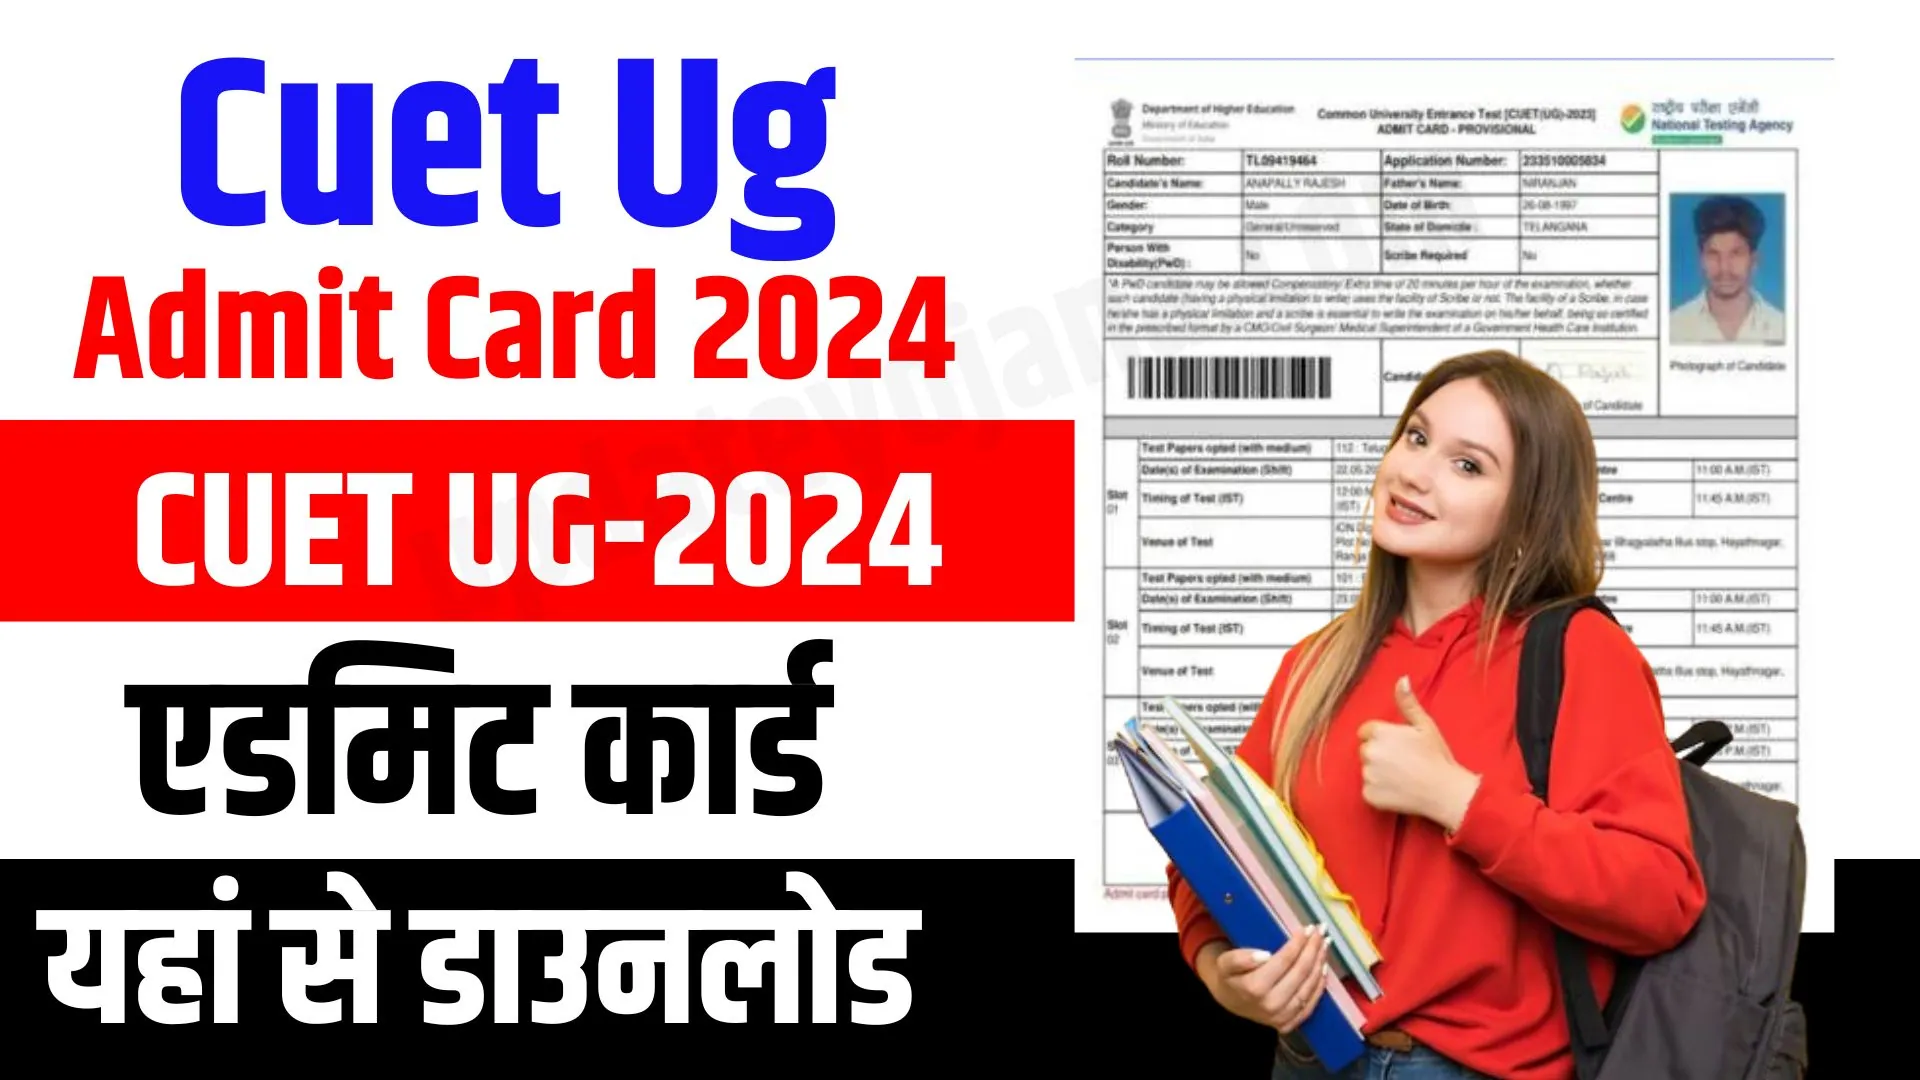 CUET UG Admit Card